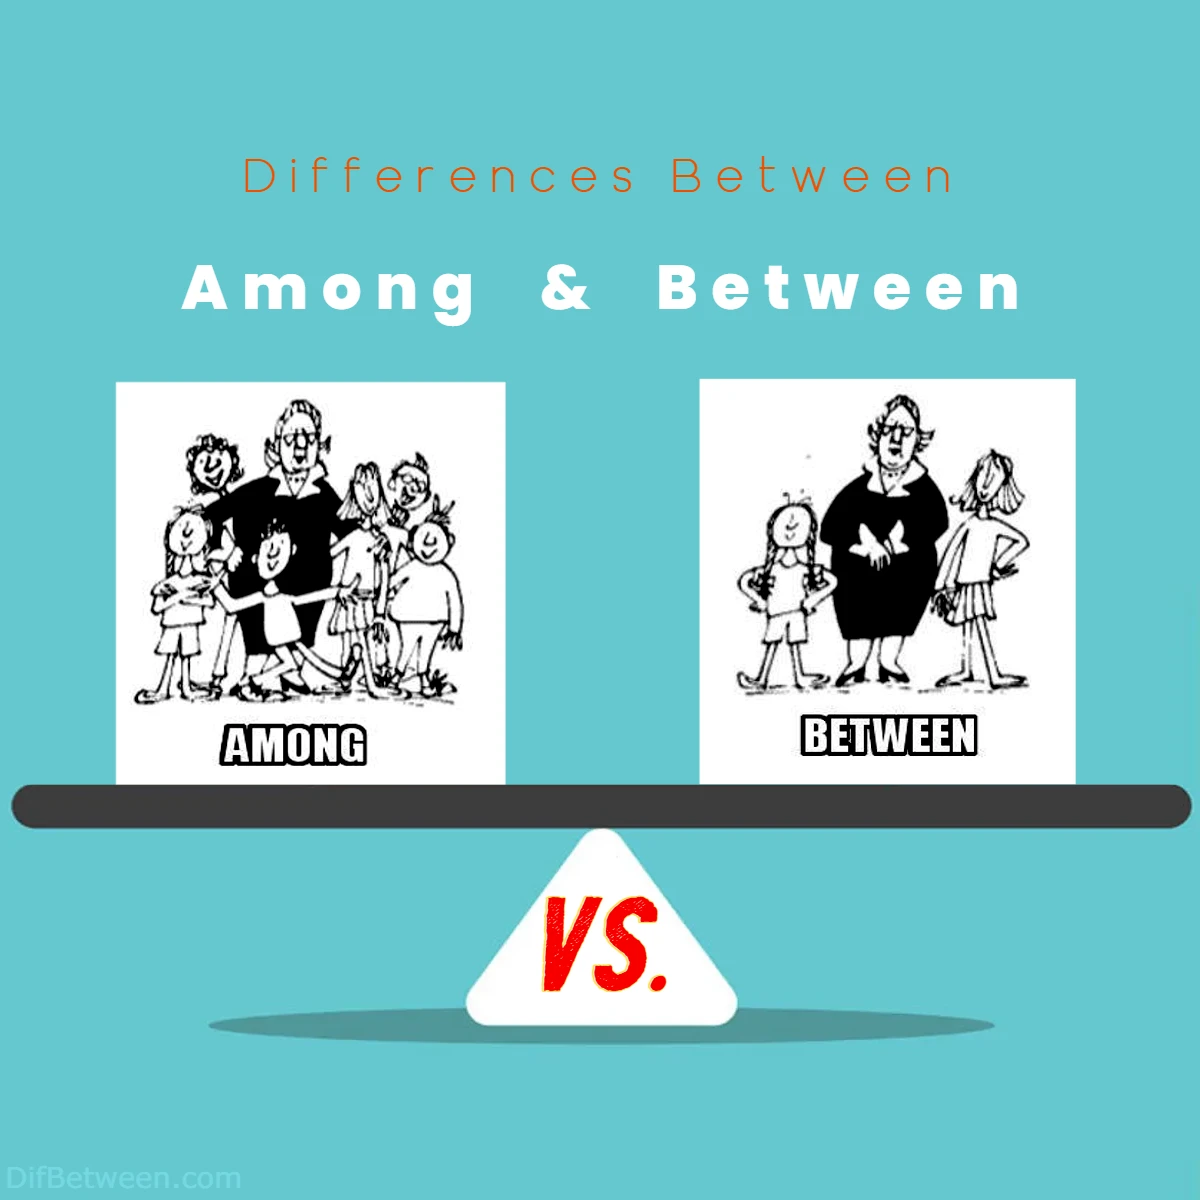 Differences Between Among vs Between